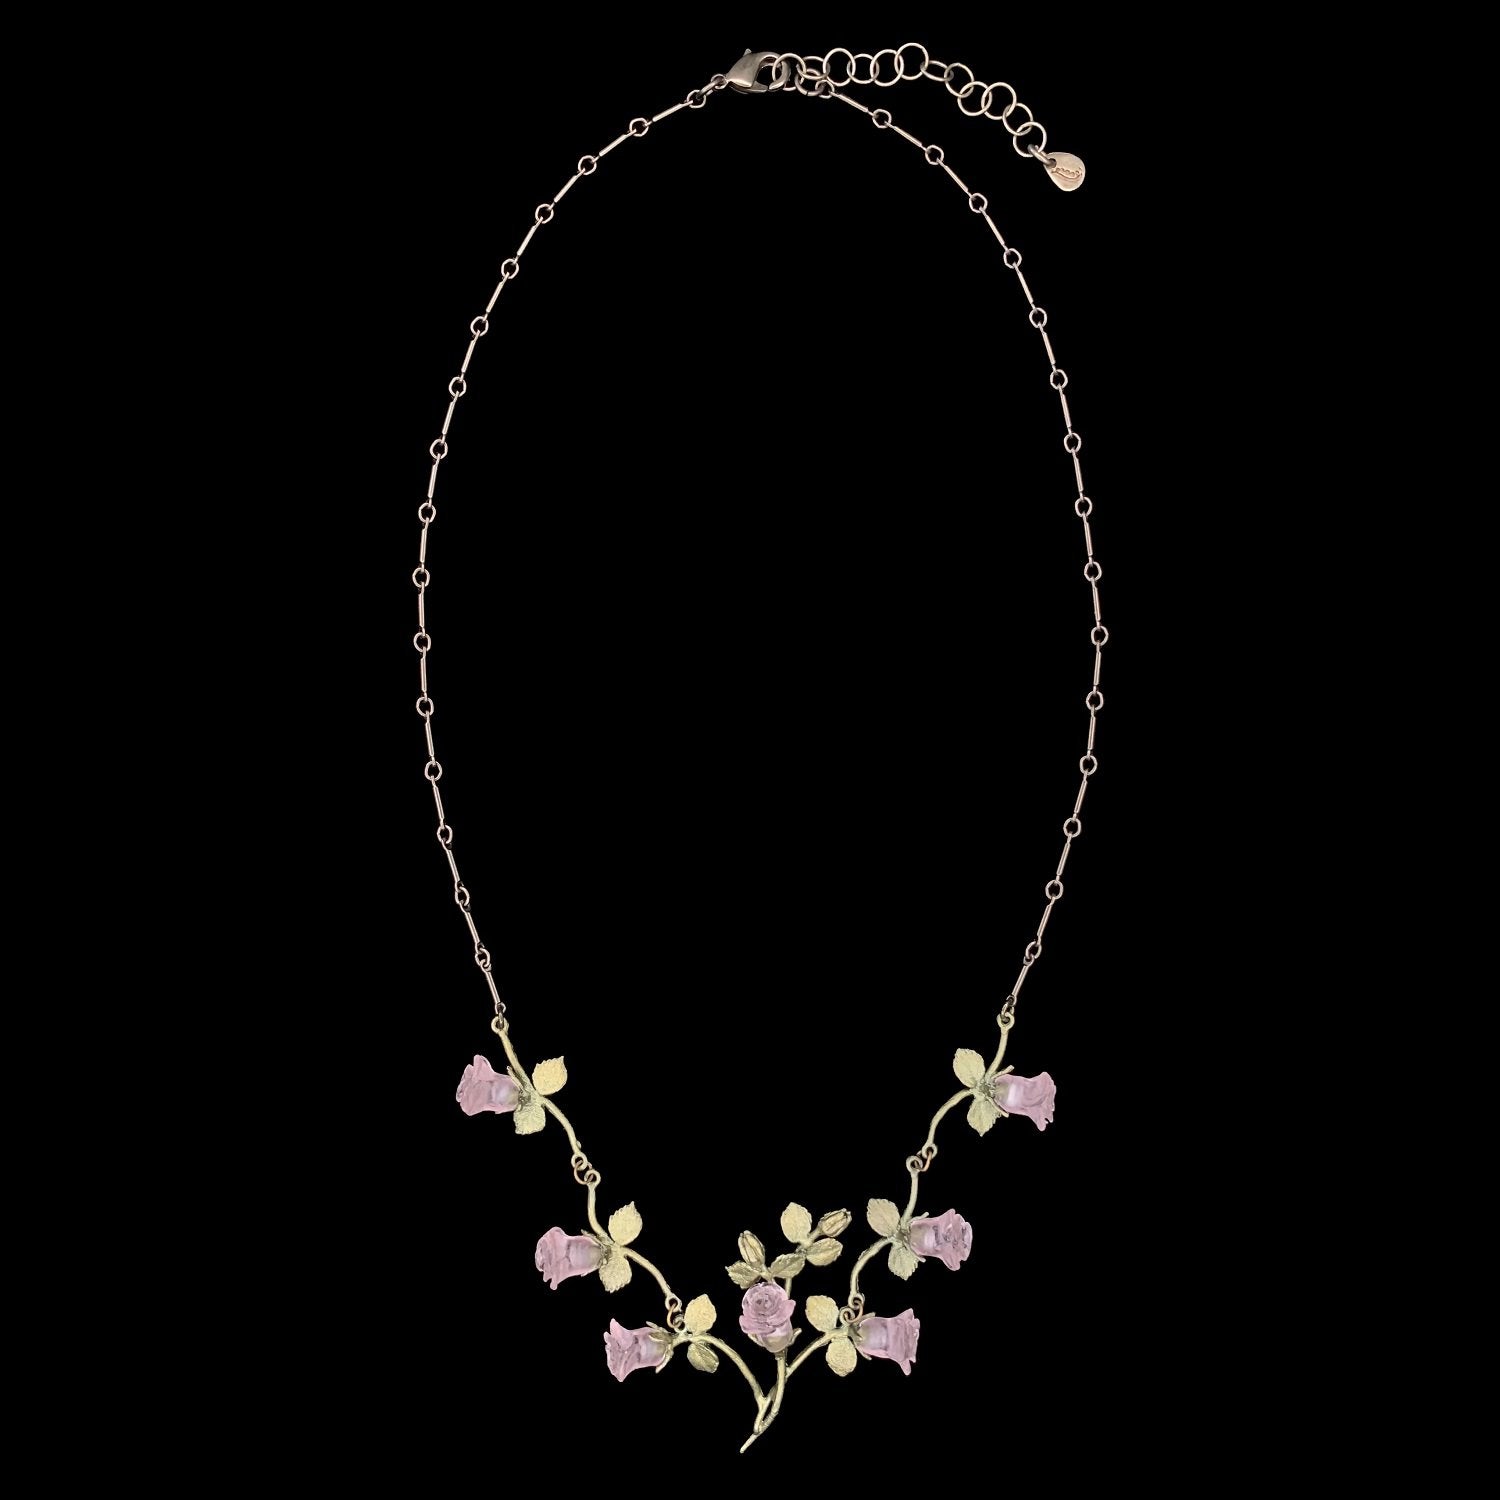 Blushing Rose Necklace - Vines